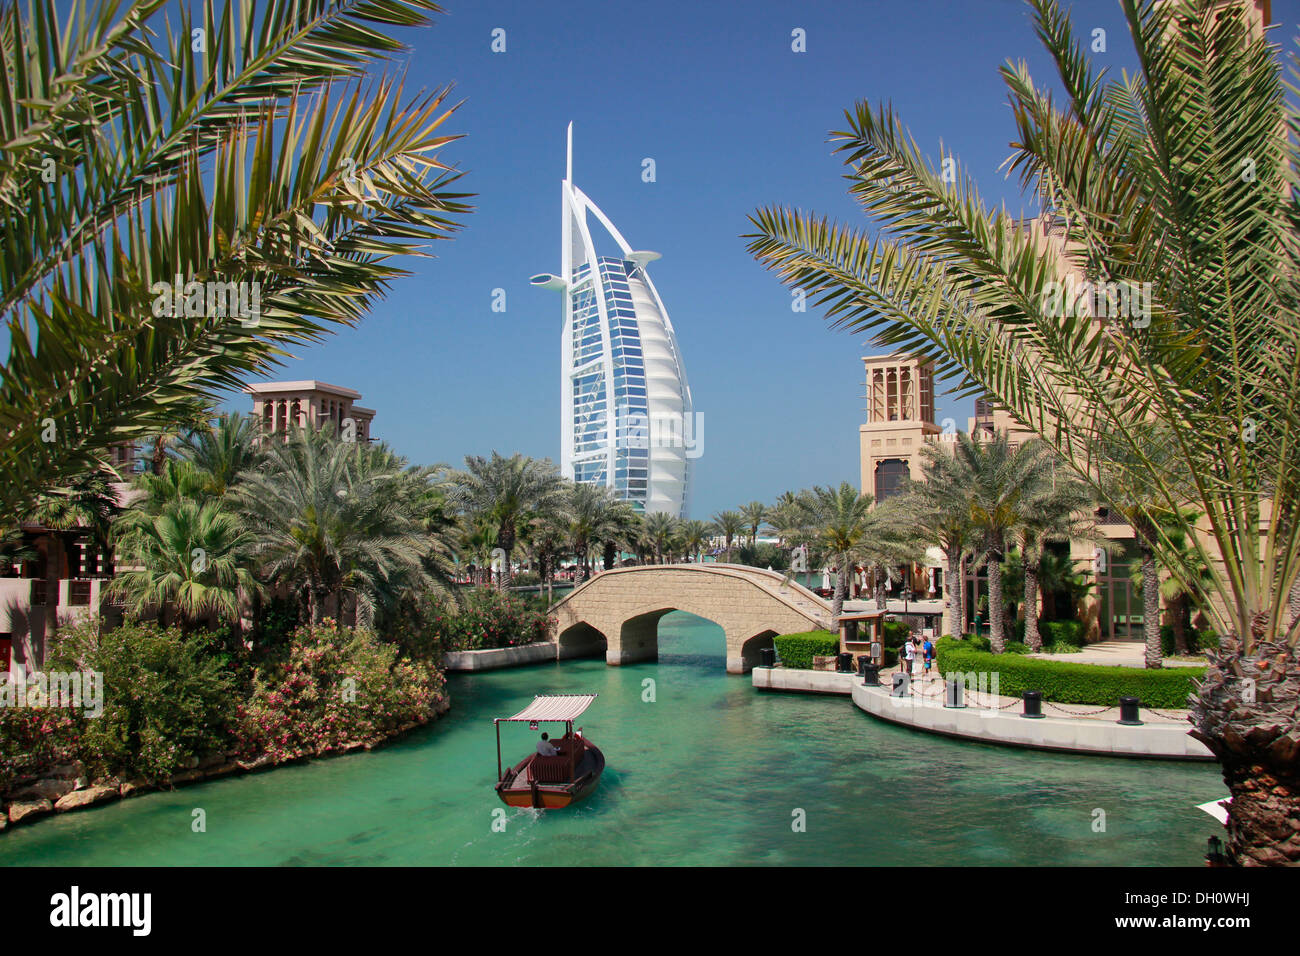 Water channel at Madinat Jumeirah, Burj al Arab luxury hotel at back, Burj al Arab, Dubai, United Arab Emirates Stock Photo